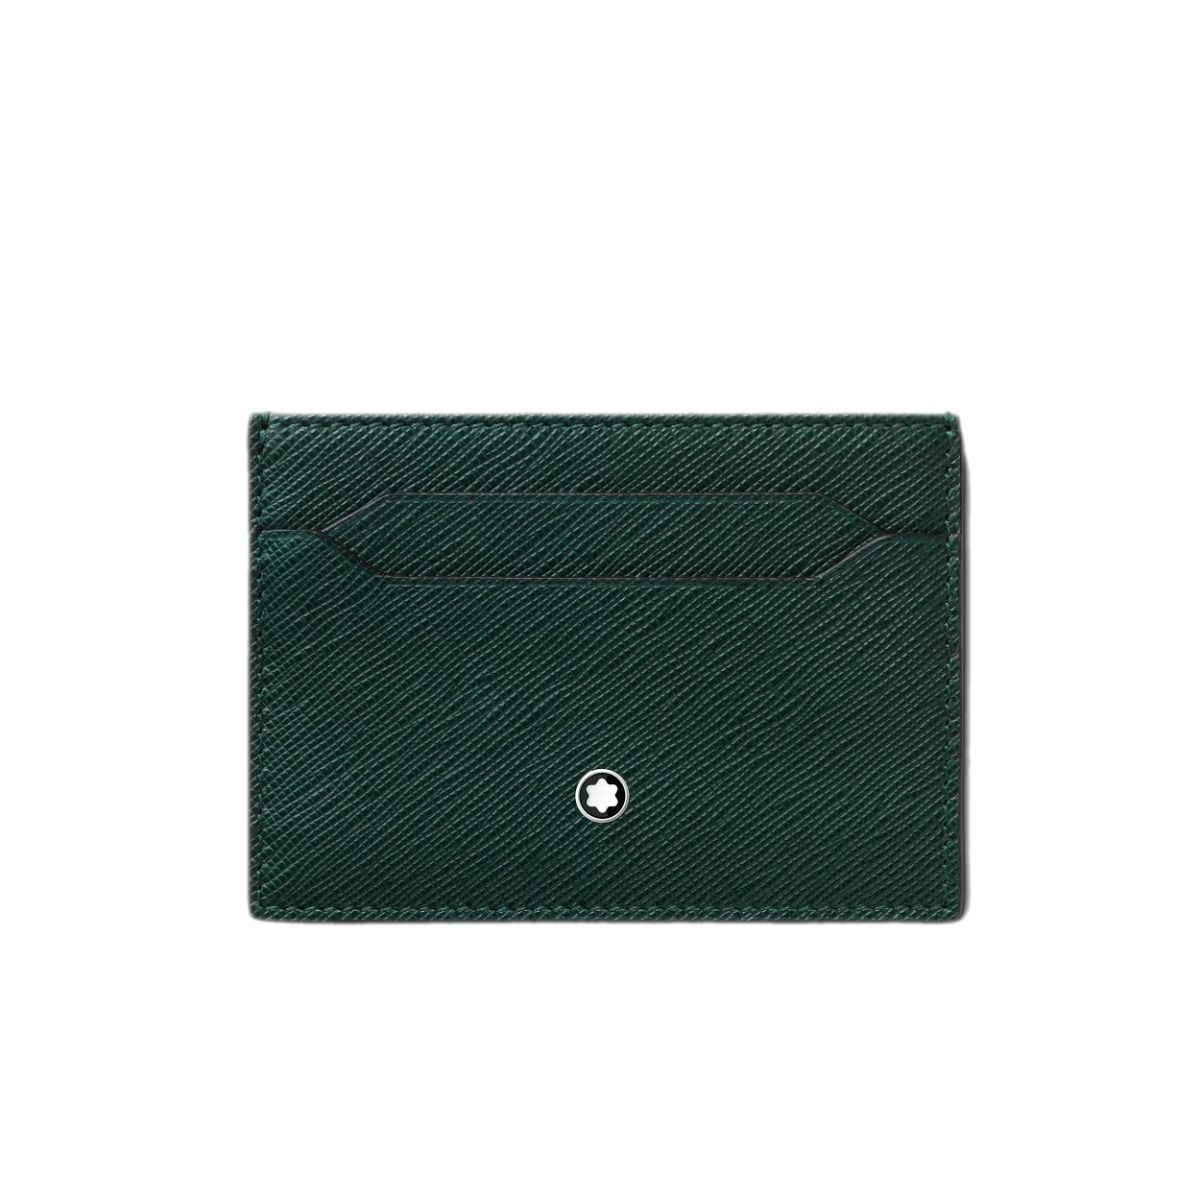 Montblanc / Sartorial / porta carte 5 scomparti / pelle verde smeraldo